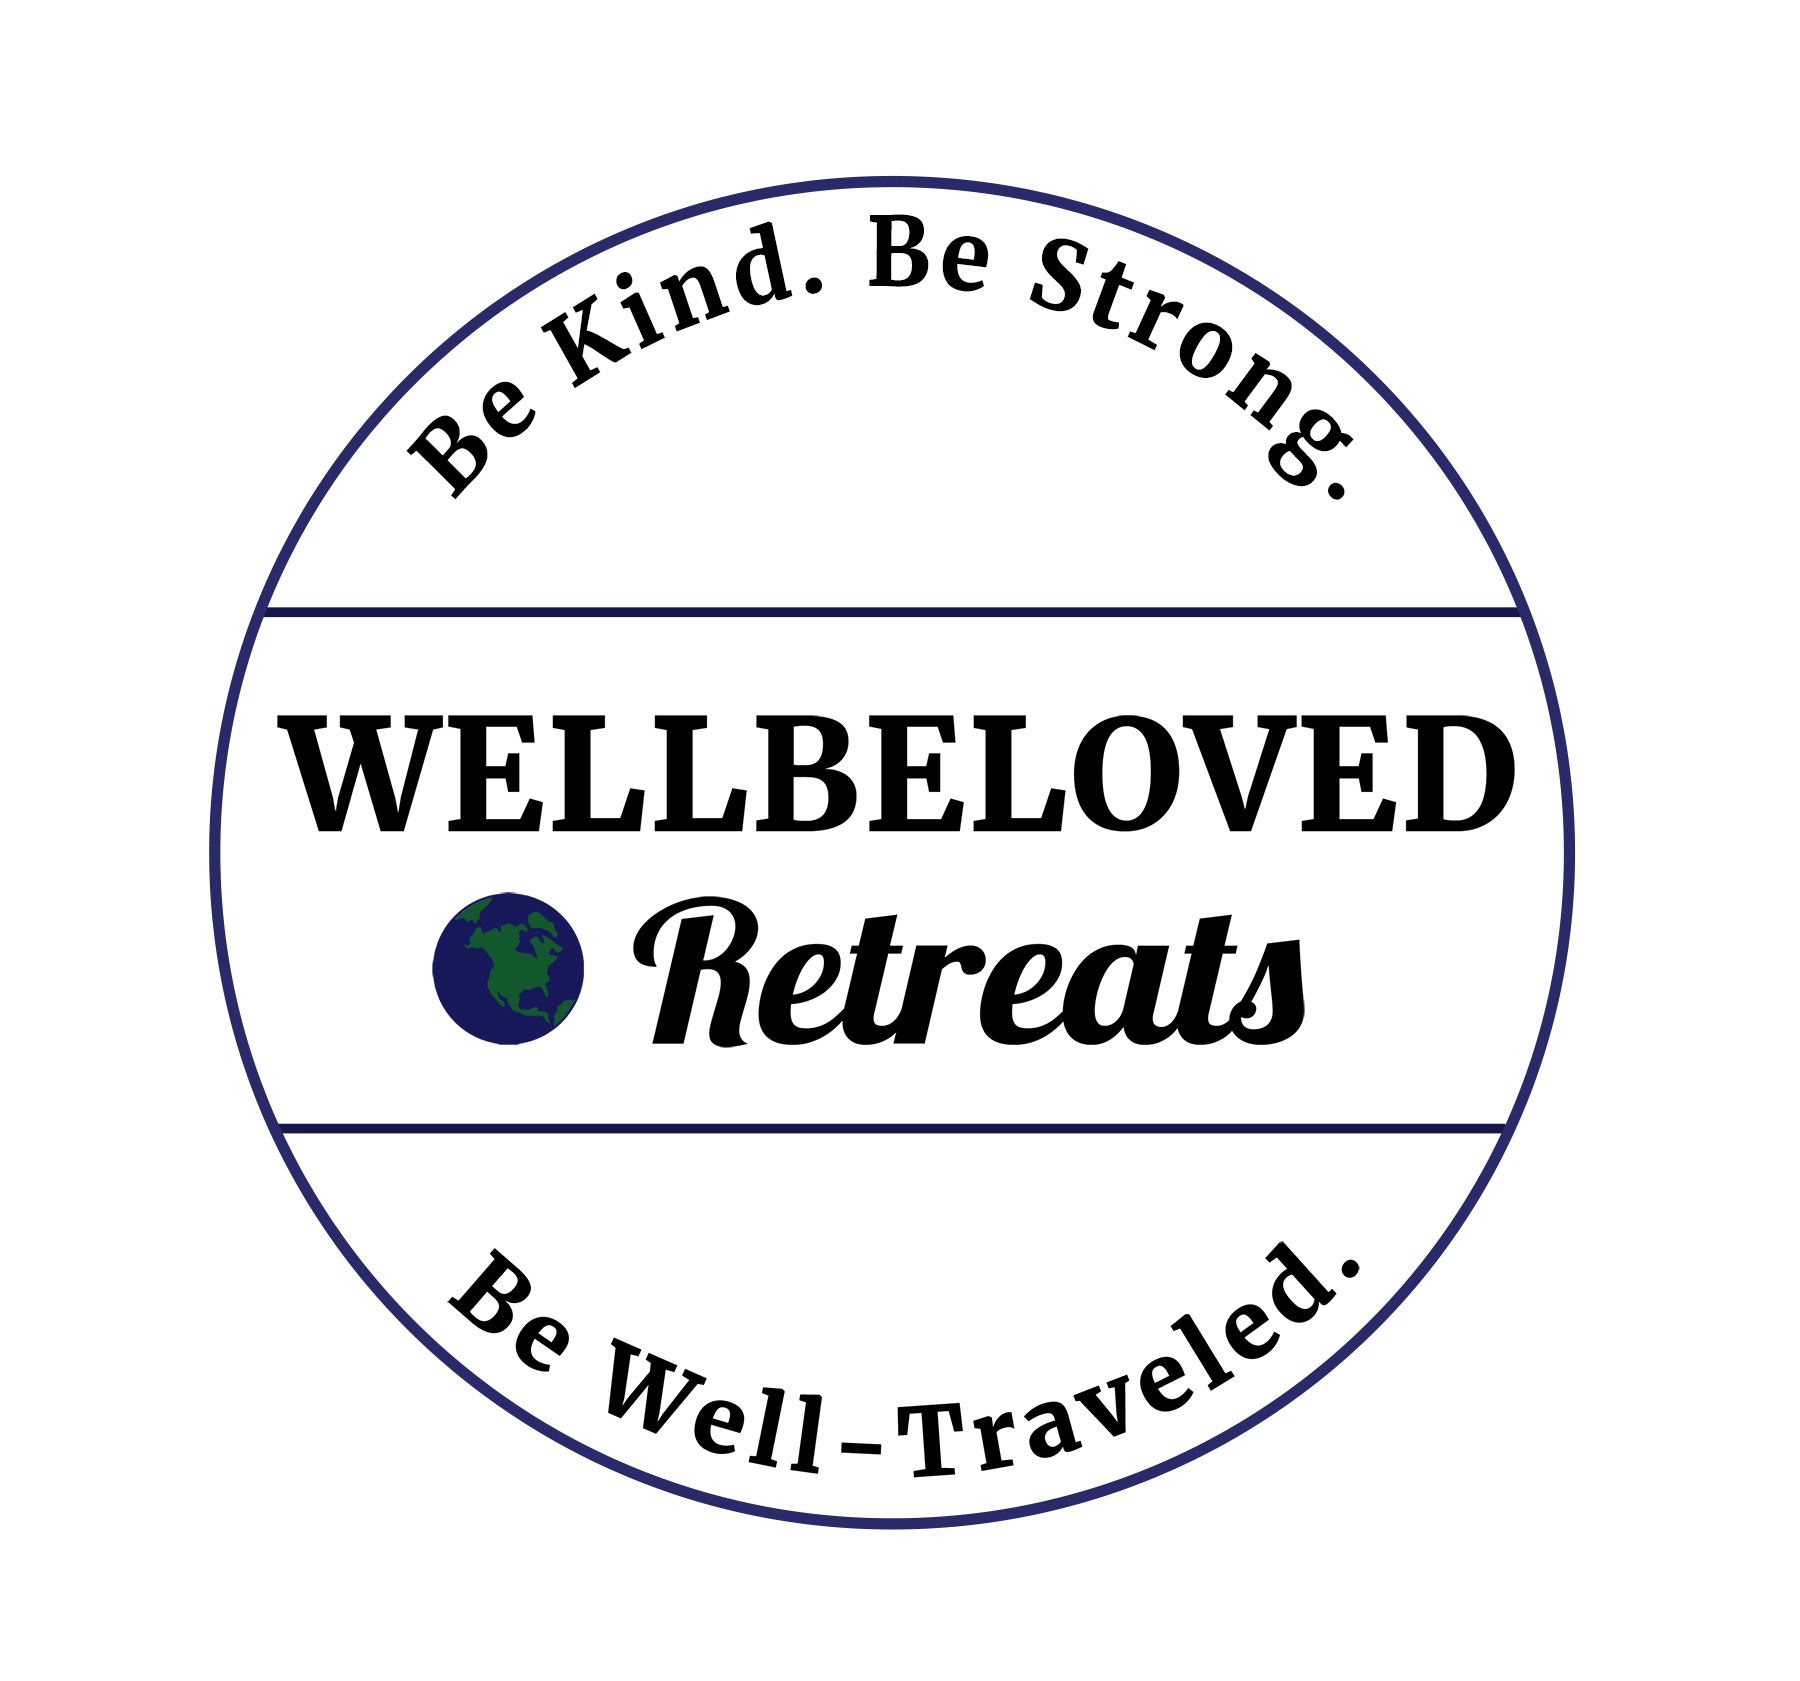 Wellbeloved Retreats